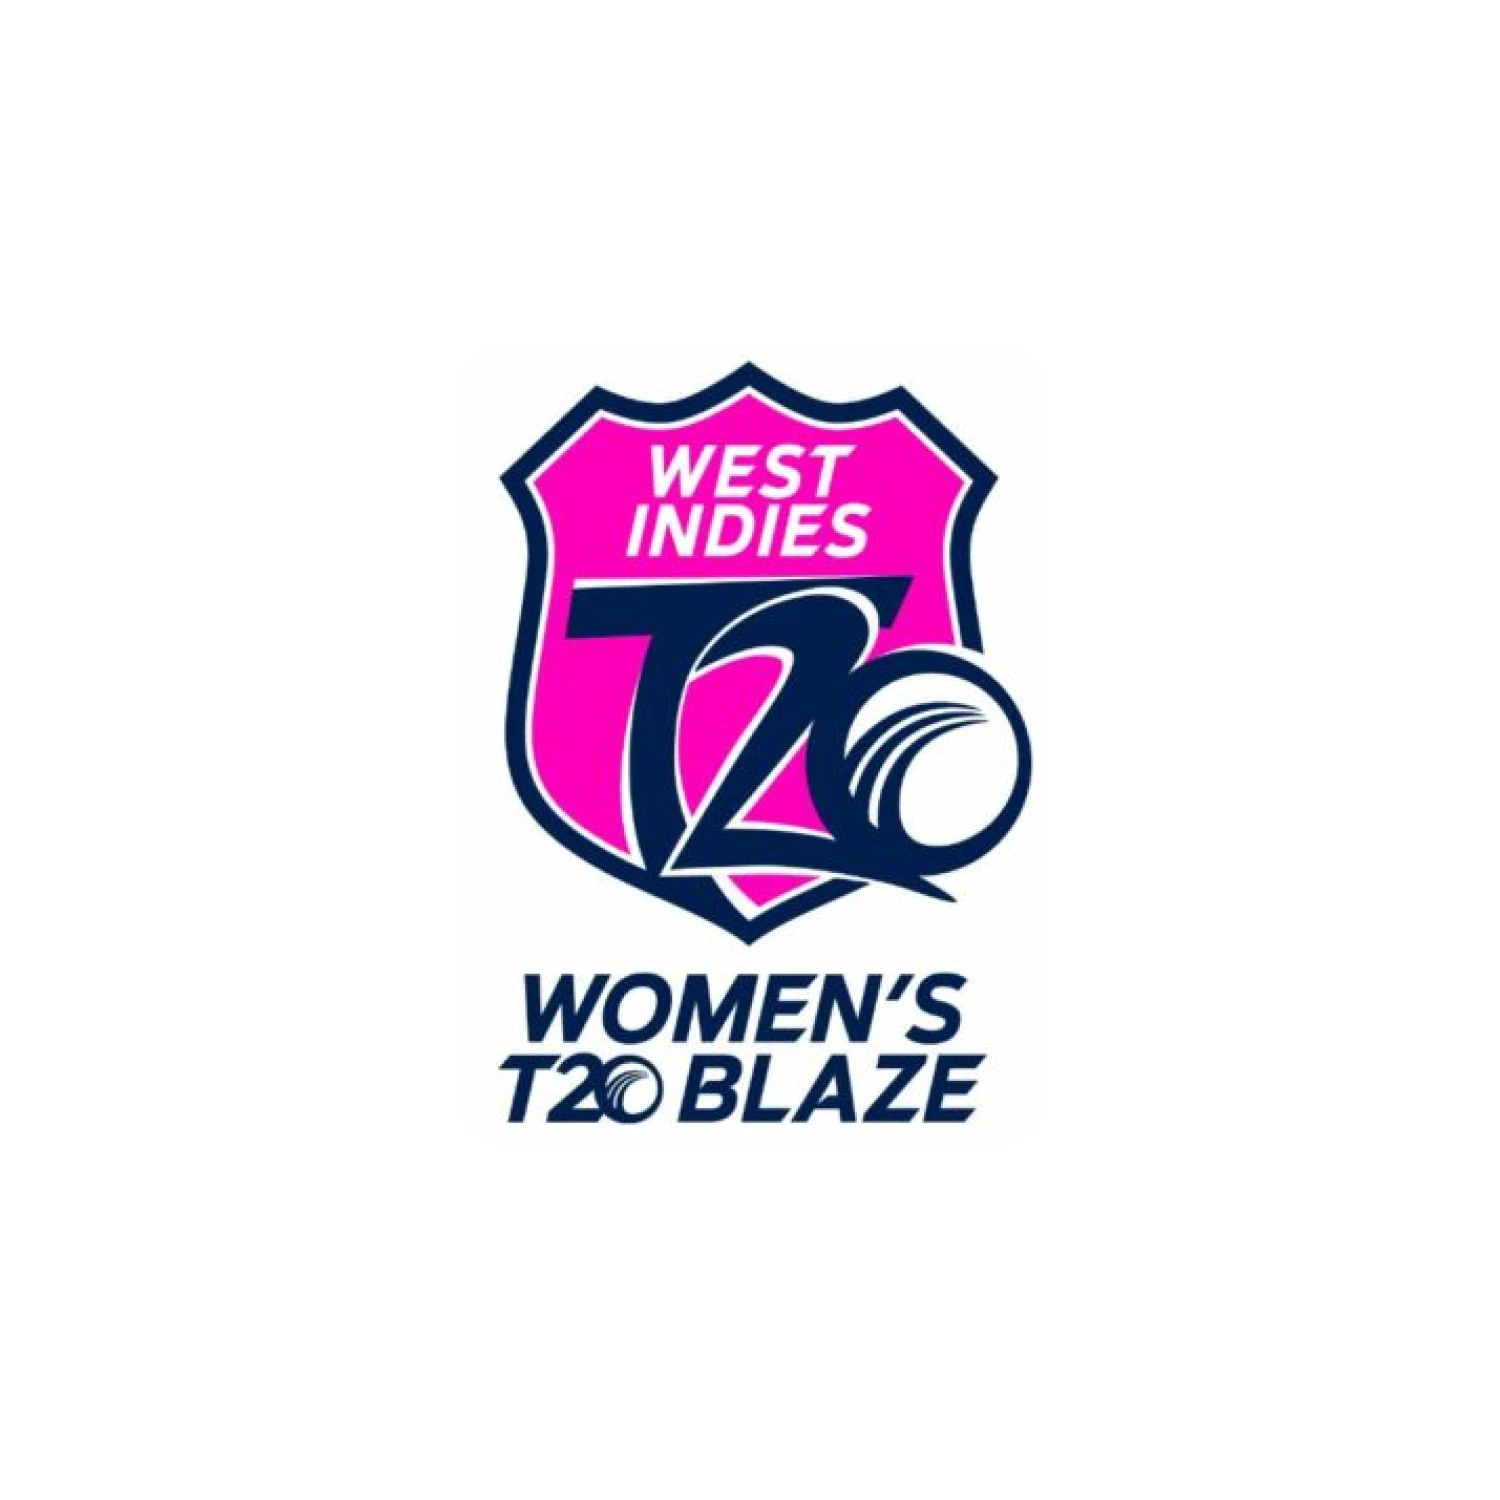 Read more about Women's T20 Blaze.